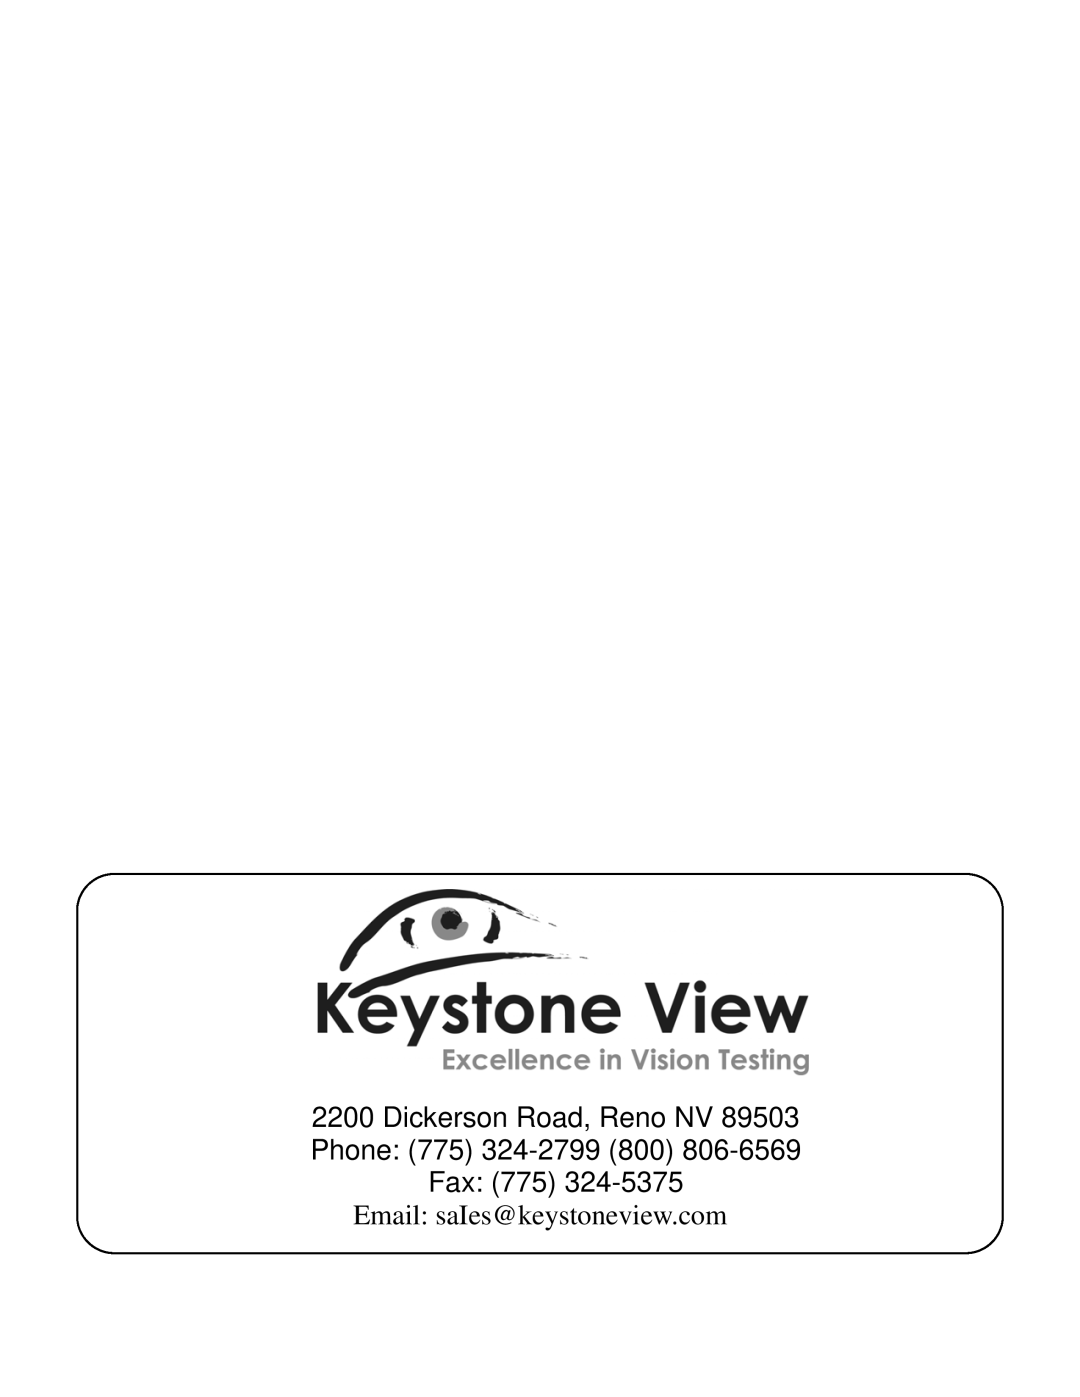 Keystone 1157 instruction manual Dickerson Road, Reno NV Phone 775 324-2799 800 Fax 775, Email saIes@keystoneview.com 